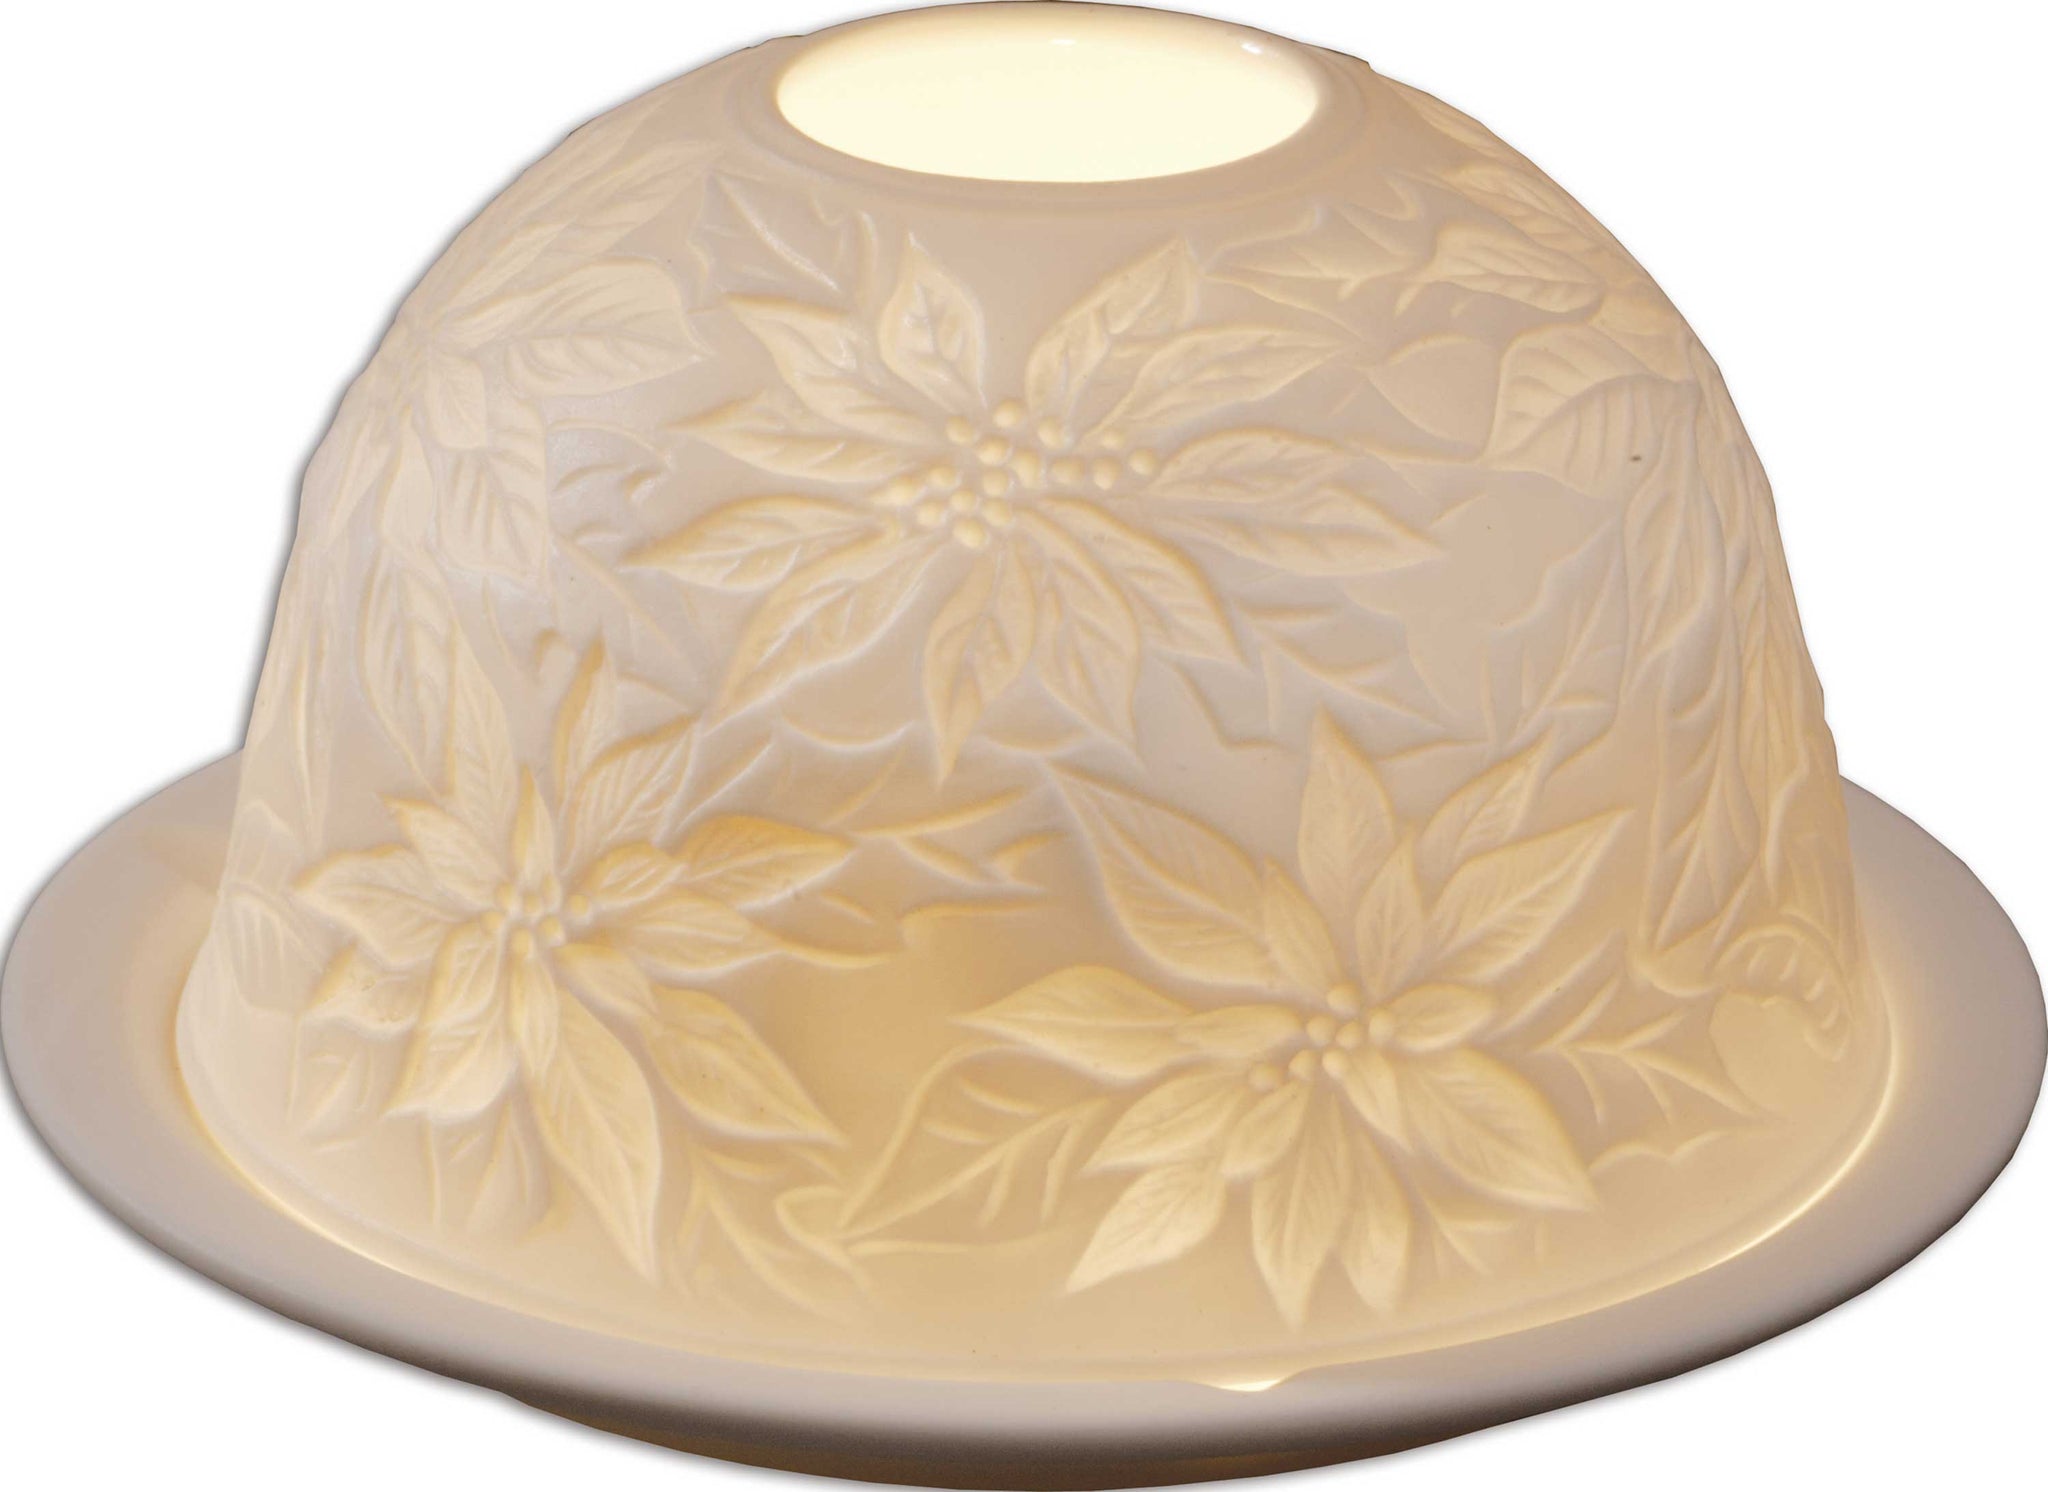 Dome-Light Poinsettia